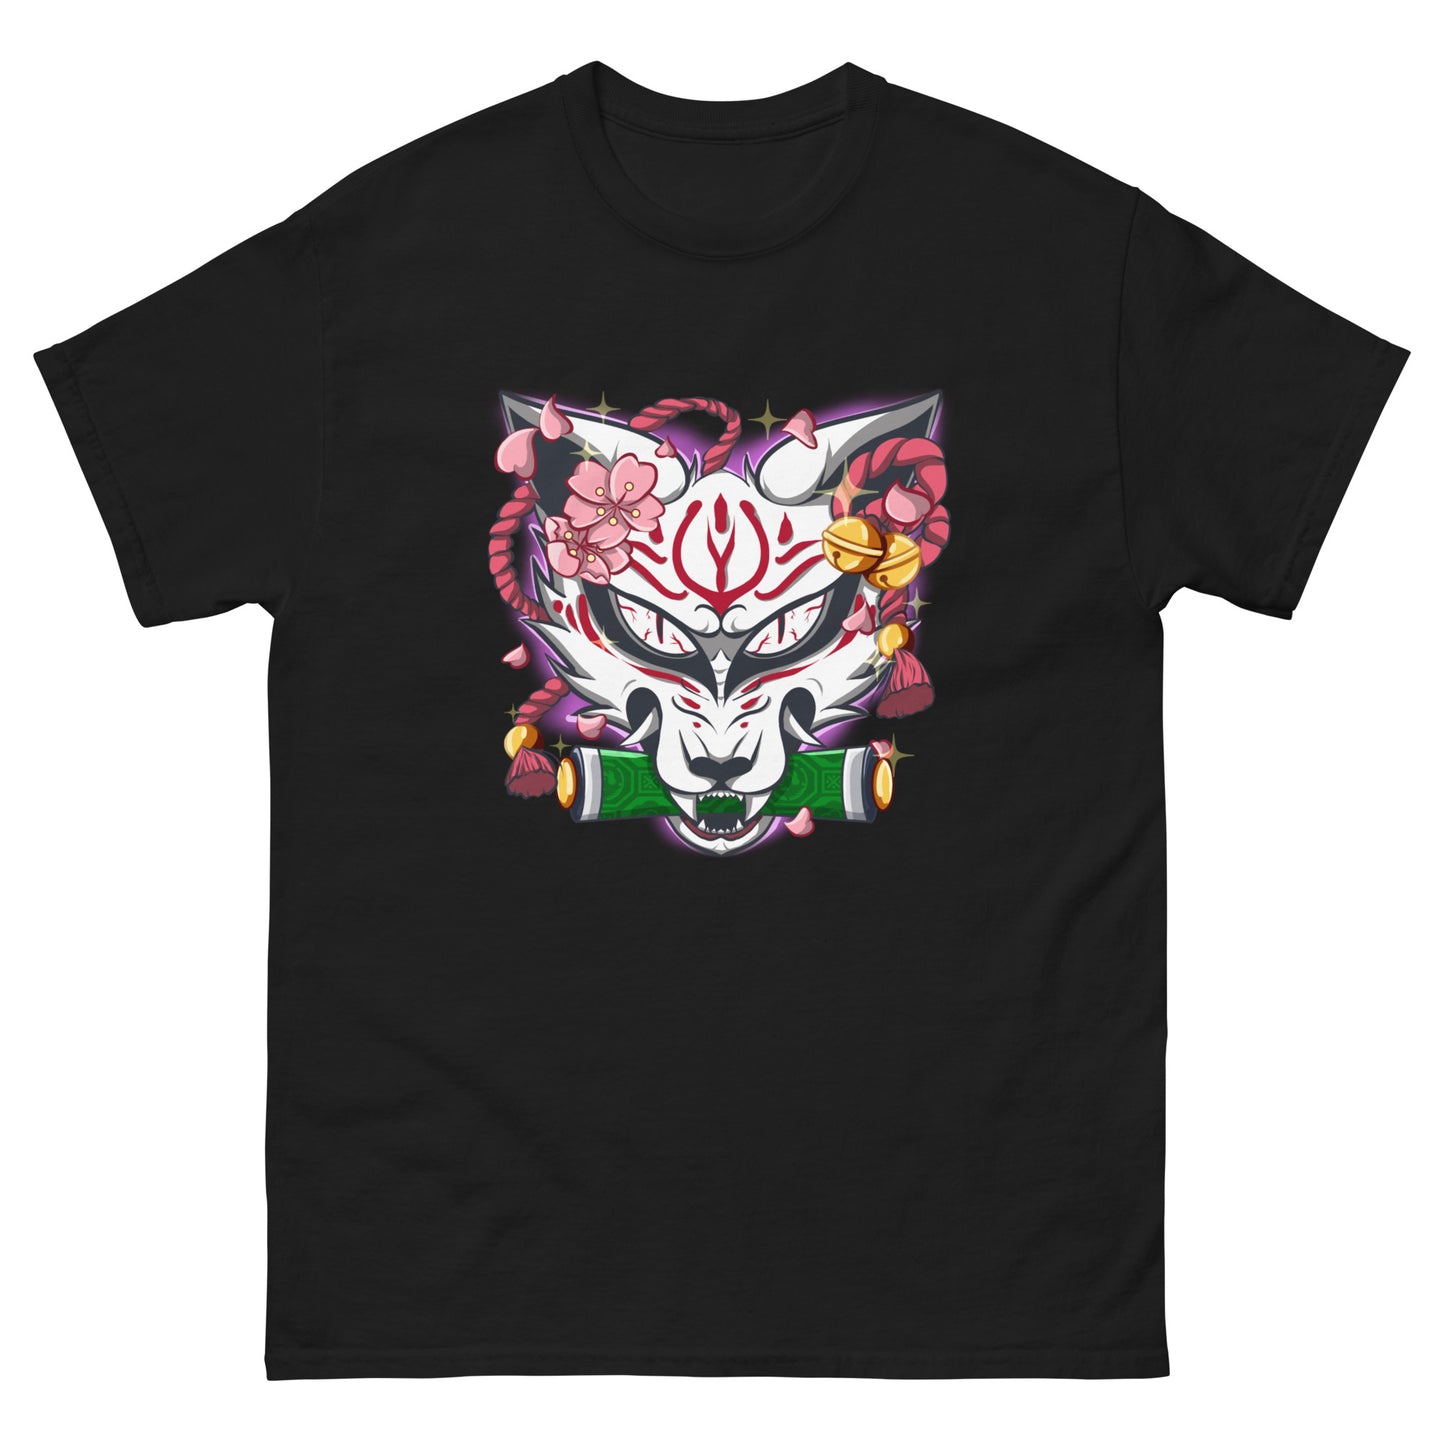 Japanese Kitsune Gamer/Streamer T-Shirt - Soft, Comfortable, and Stylish